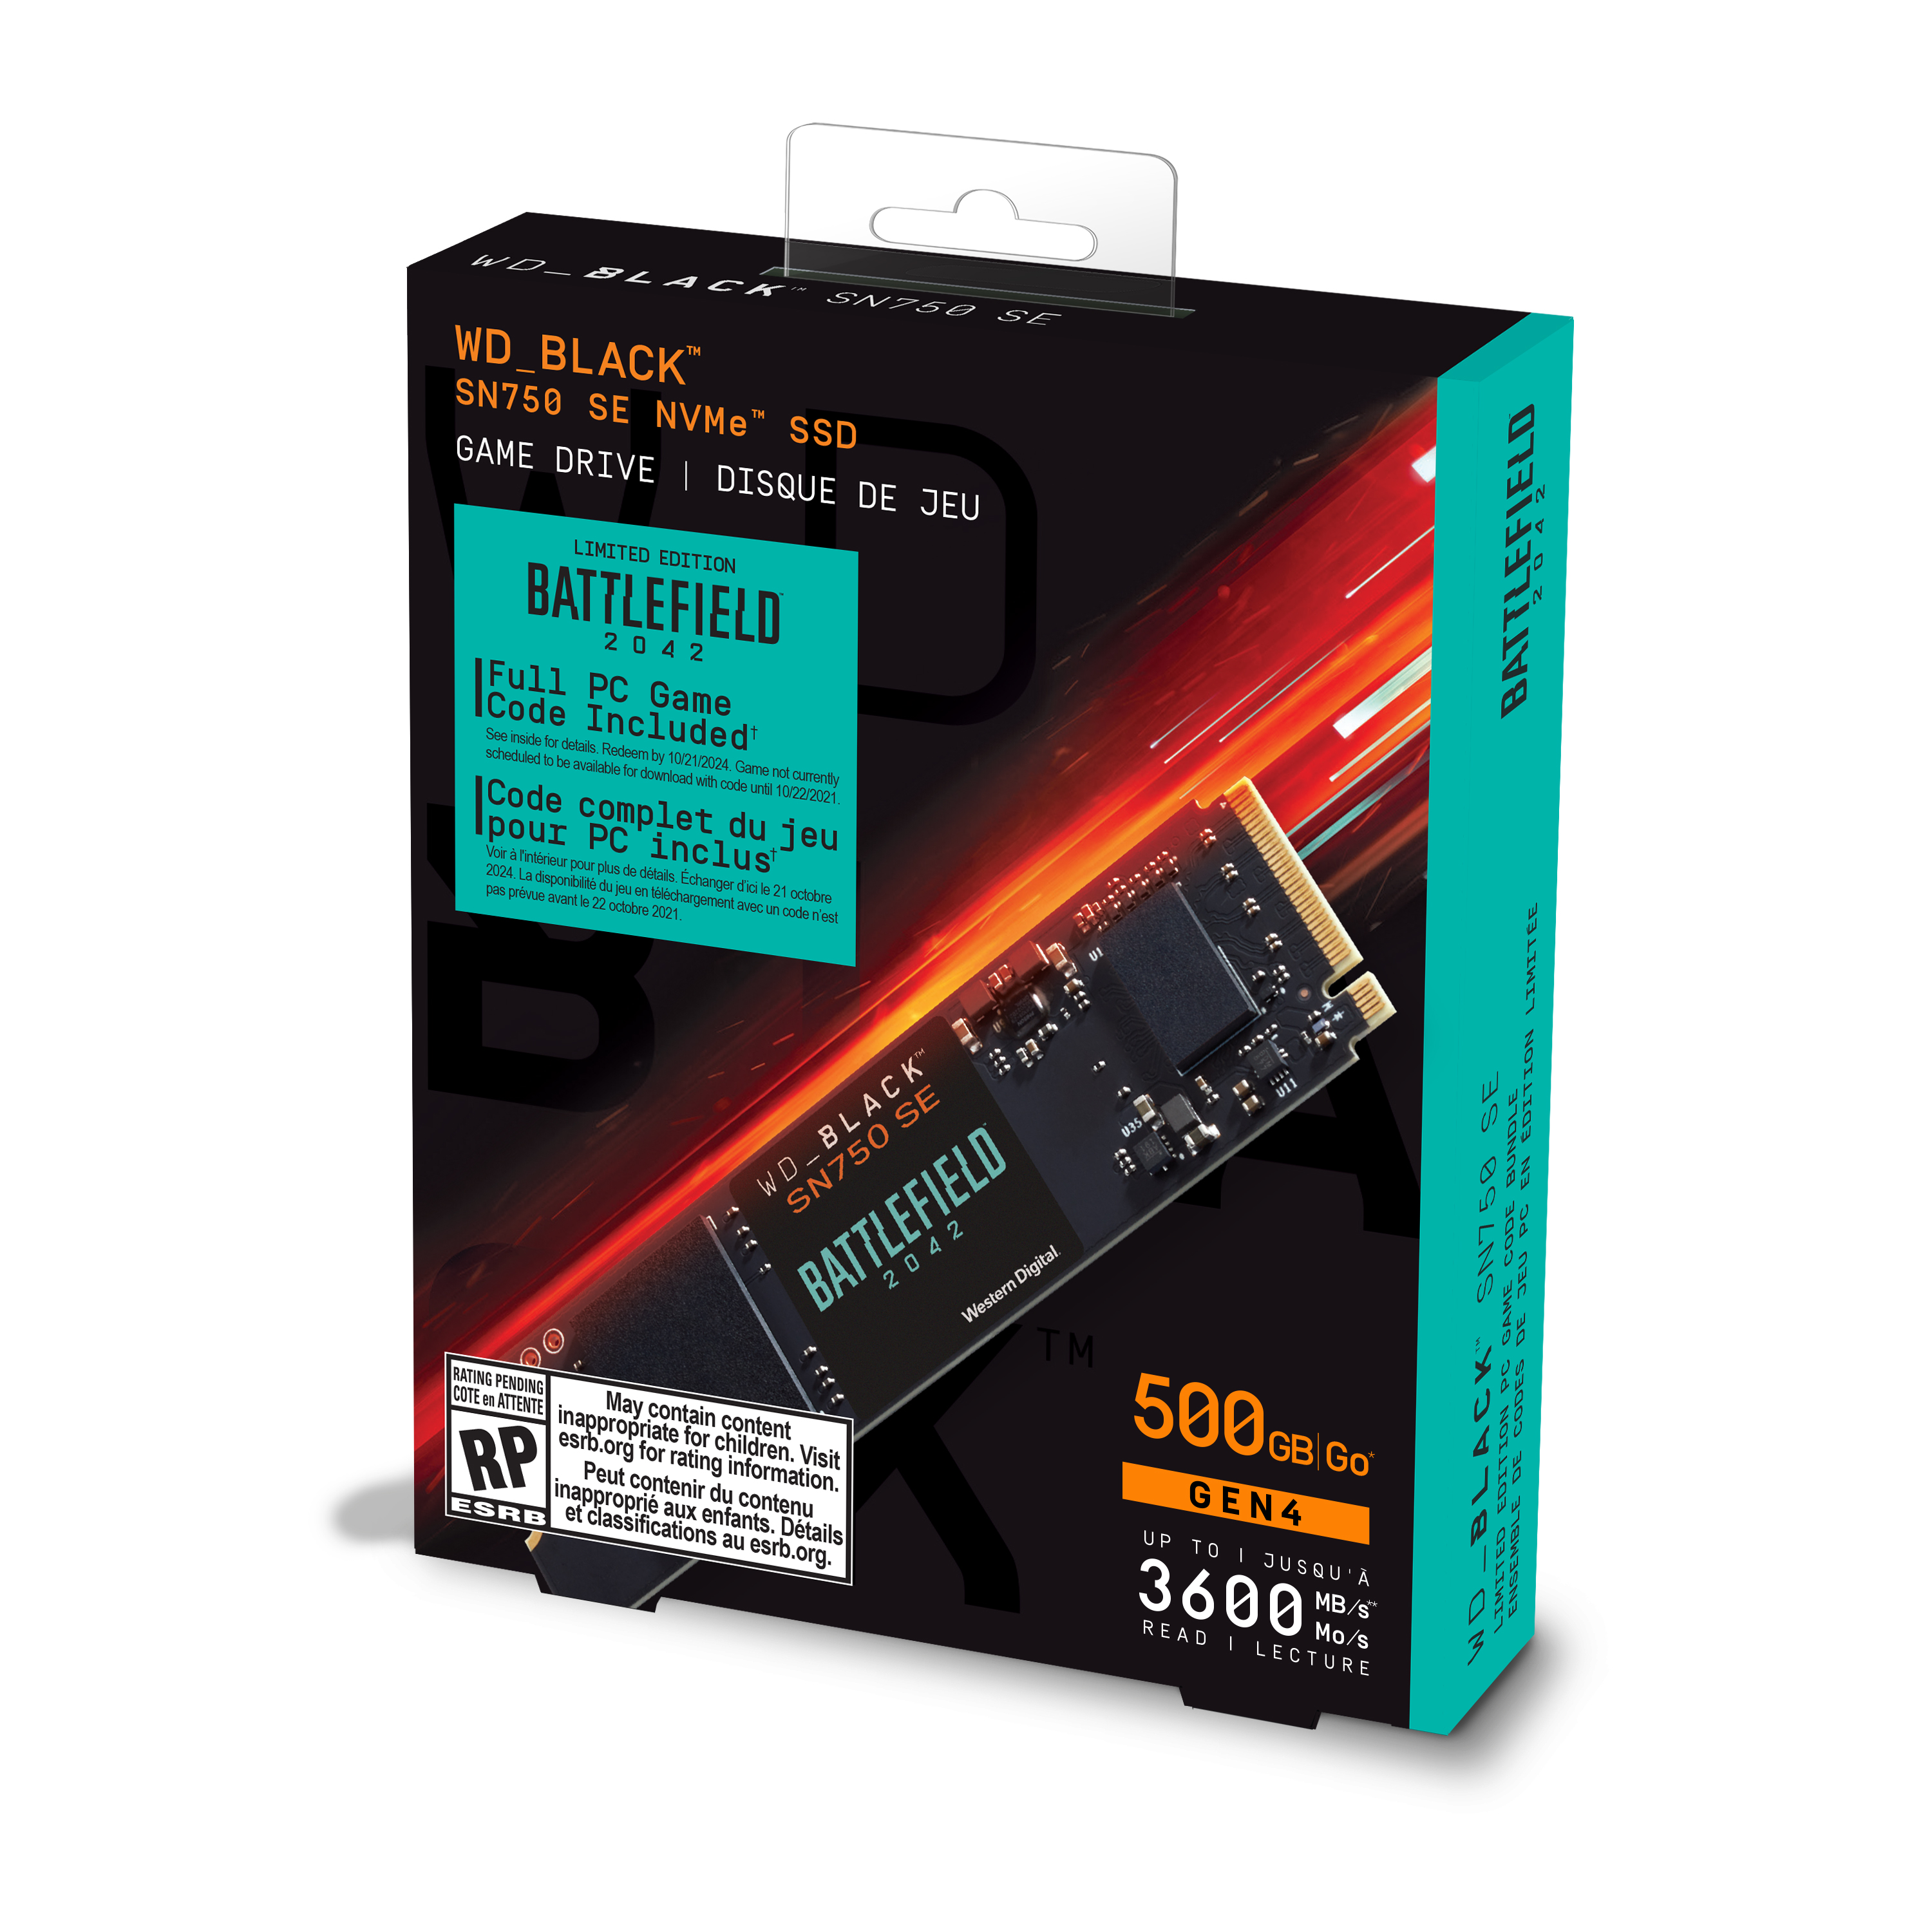 WD BLACK 500GB SN750 SE NVMe™ SSD Battlefield™ 2042 PC Game Code Bundle $89